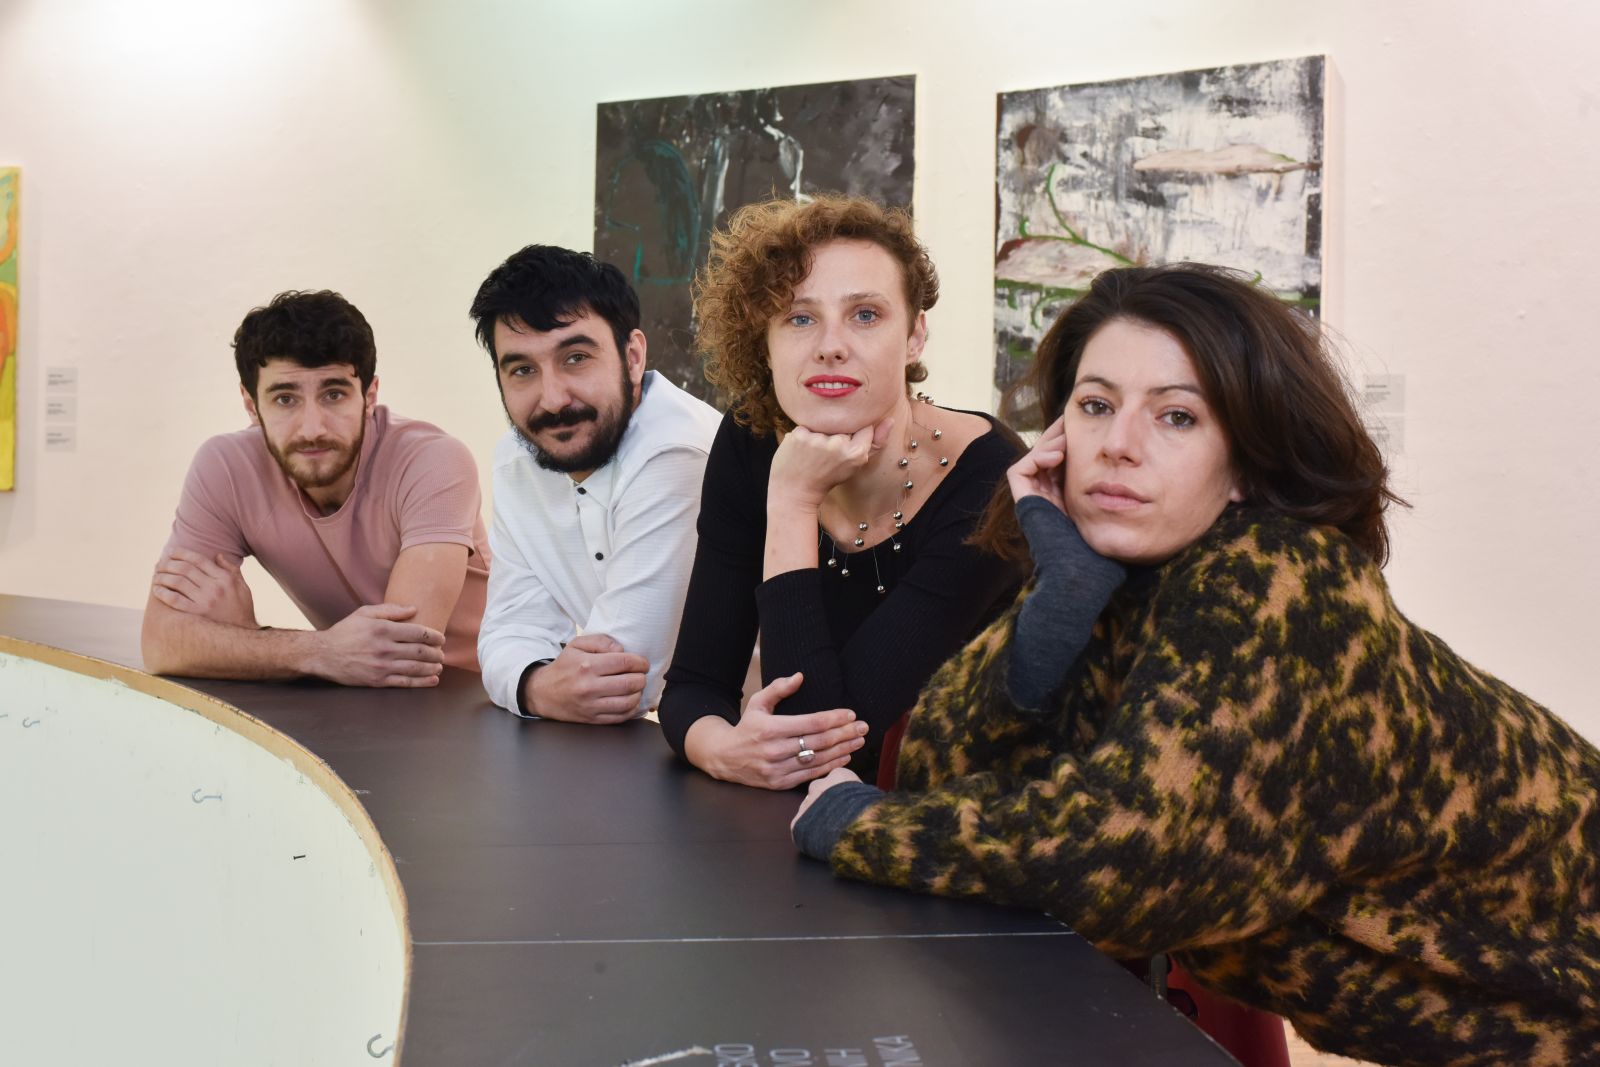 05.01.2024., Zagreb - Mladi umjetnici Natalia Borcic Peuc, Mislav Tadic, Masa Barisic i Mario Romoda. 

Photo Sasa ZinajaNFoto